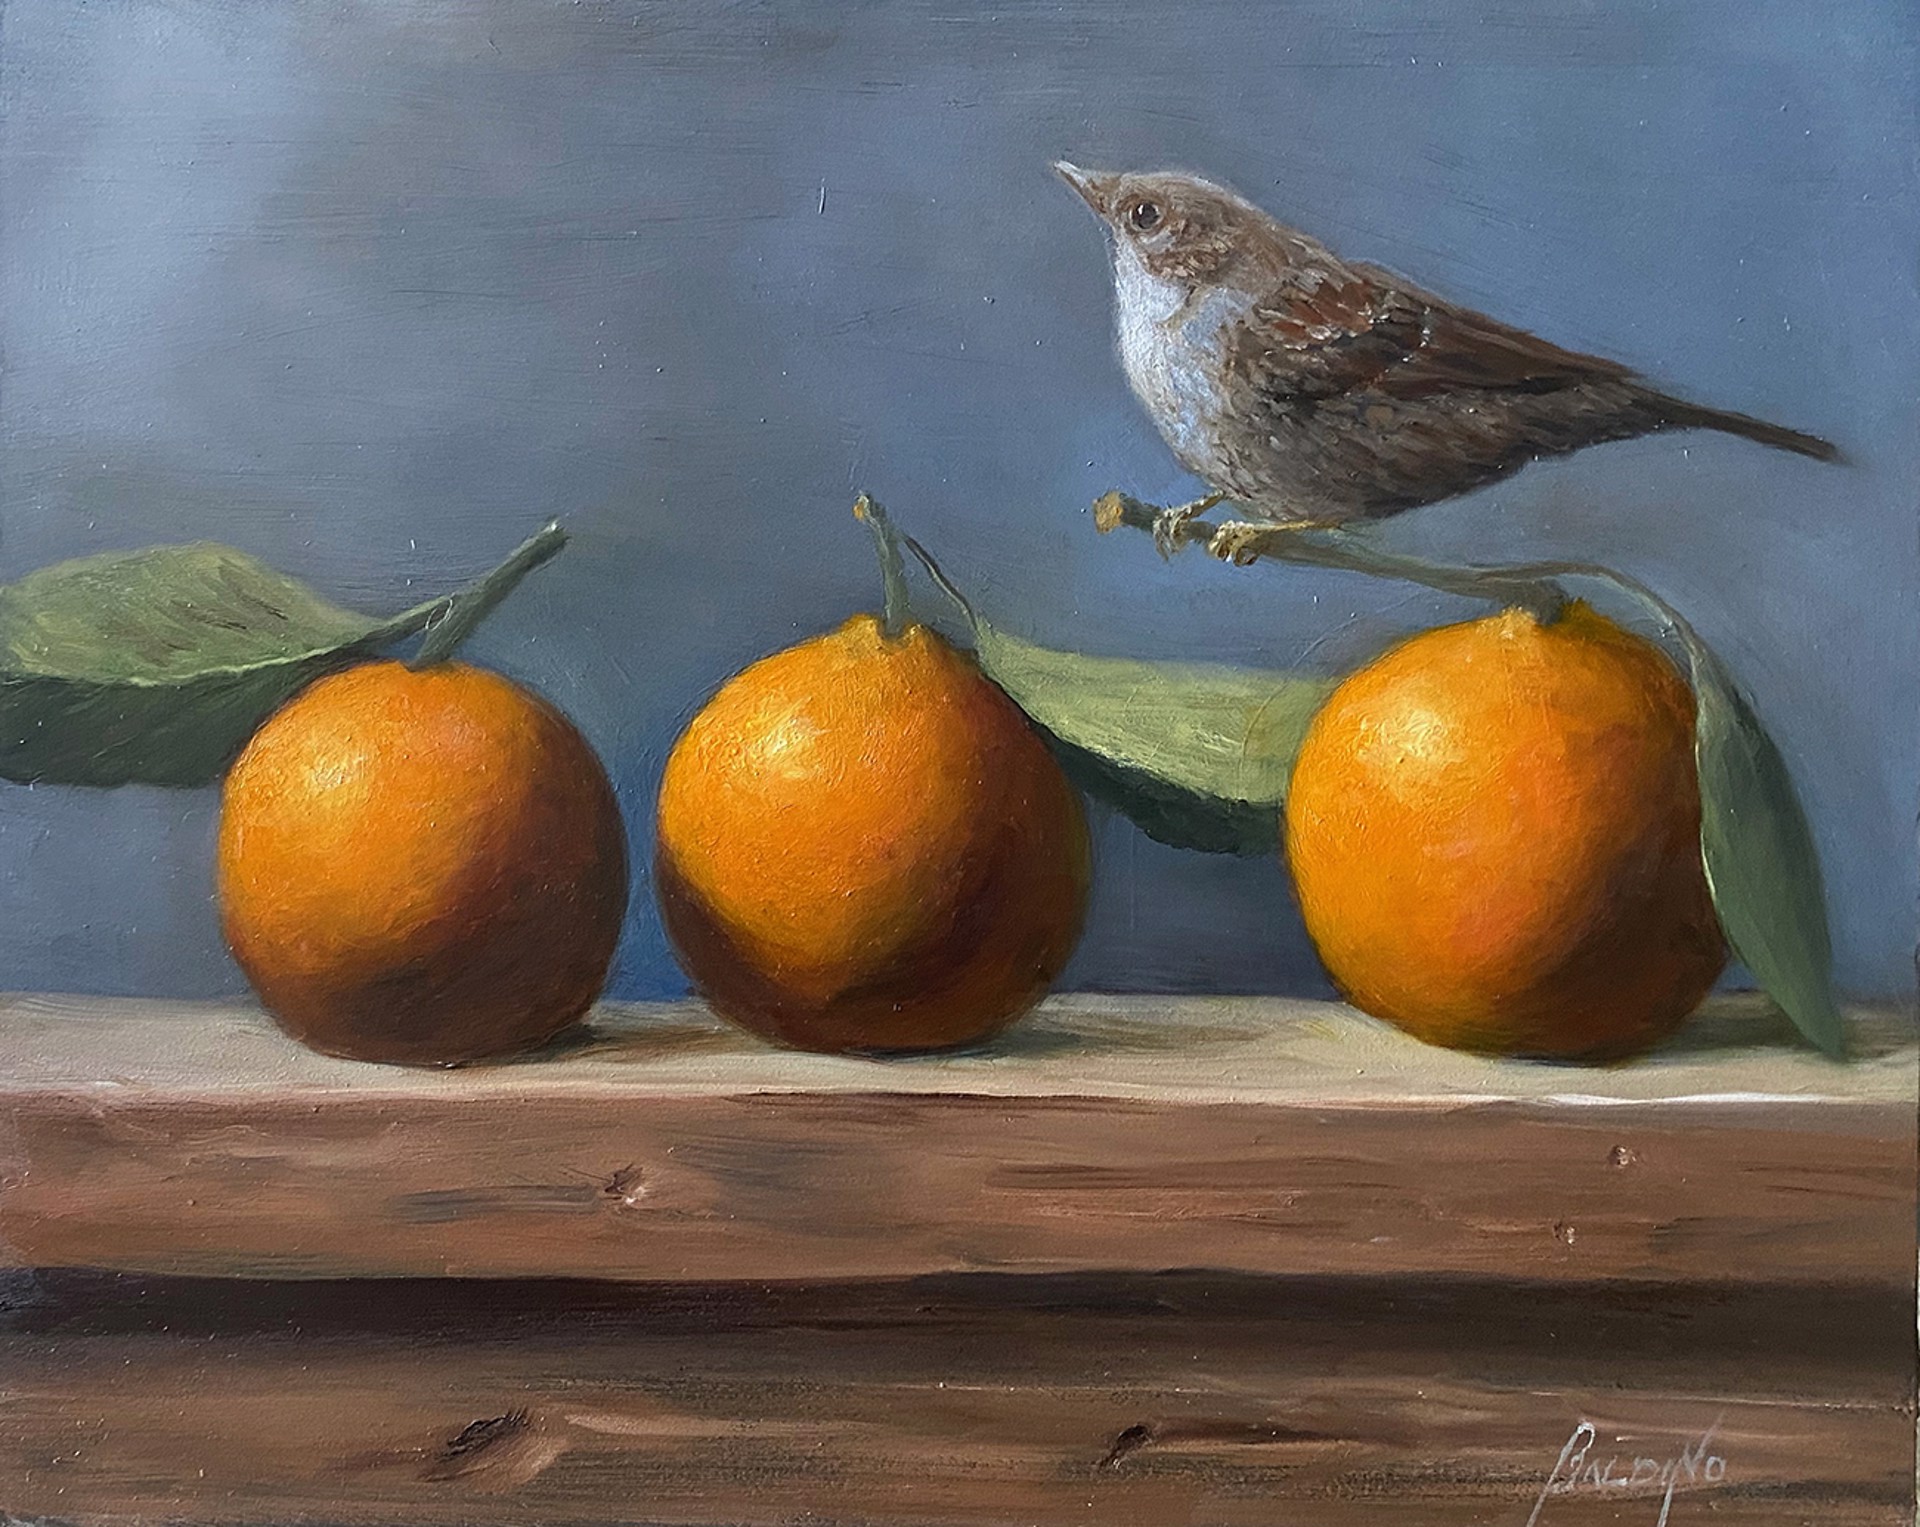 Sparrow with Tangerines by Patt Baldino